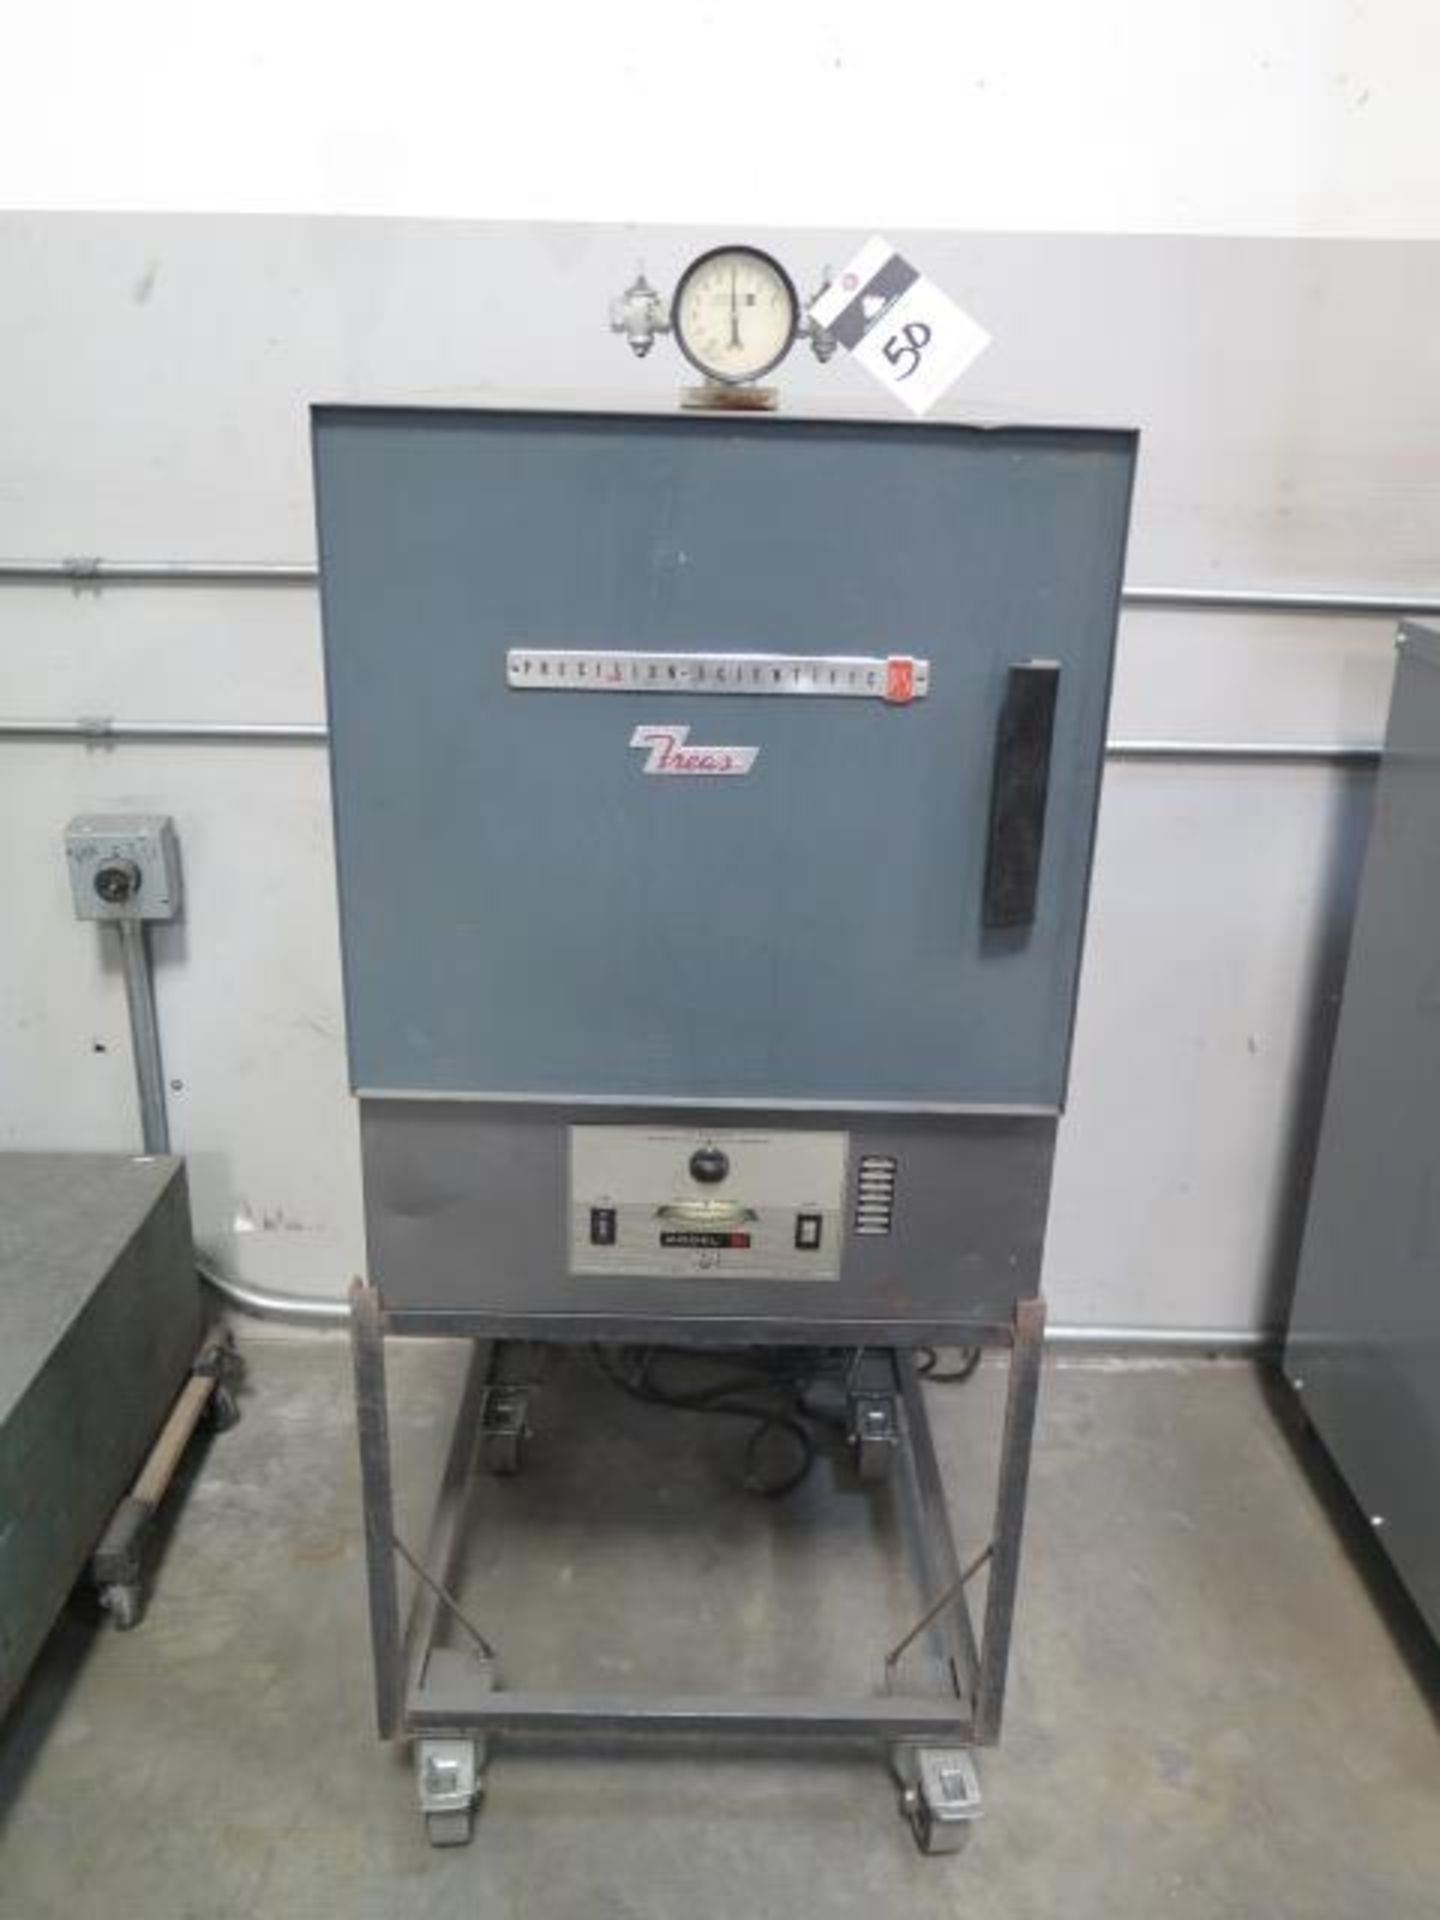 Precision Scientific / Freas mdl. 524-A 1600 Watt Electric Heat Oven (SOLD AS-IS - NO WARRANTY)